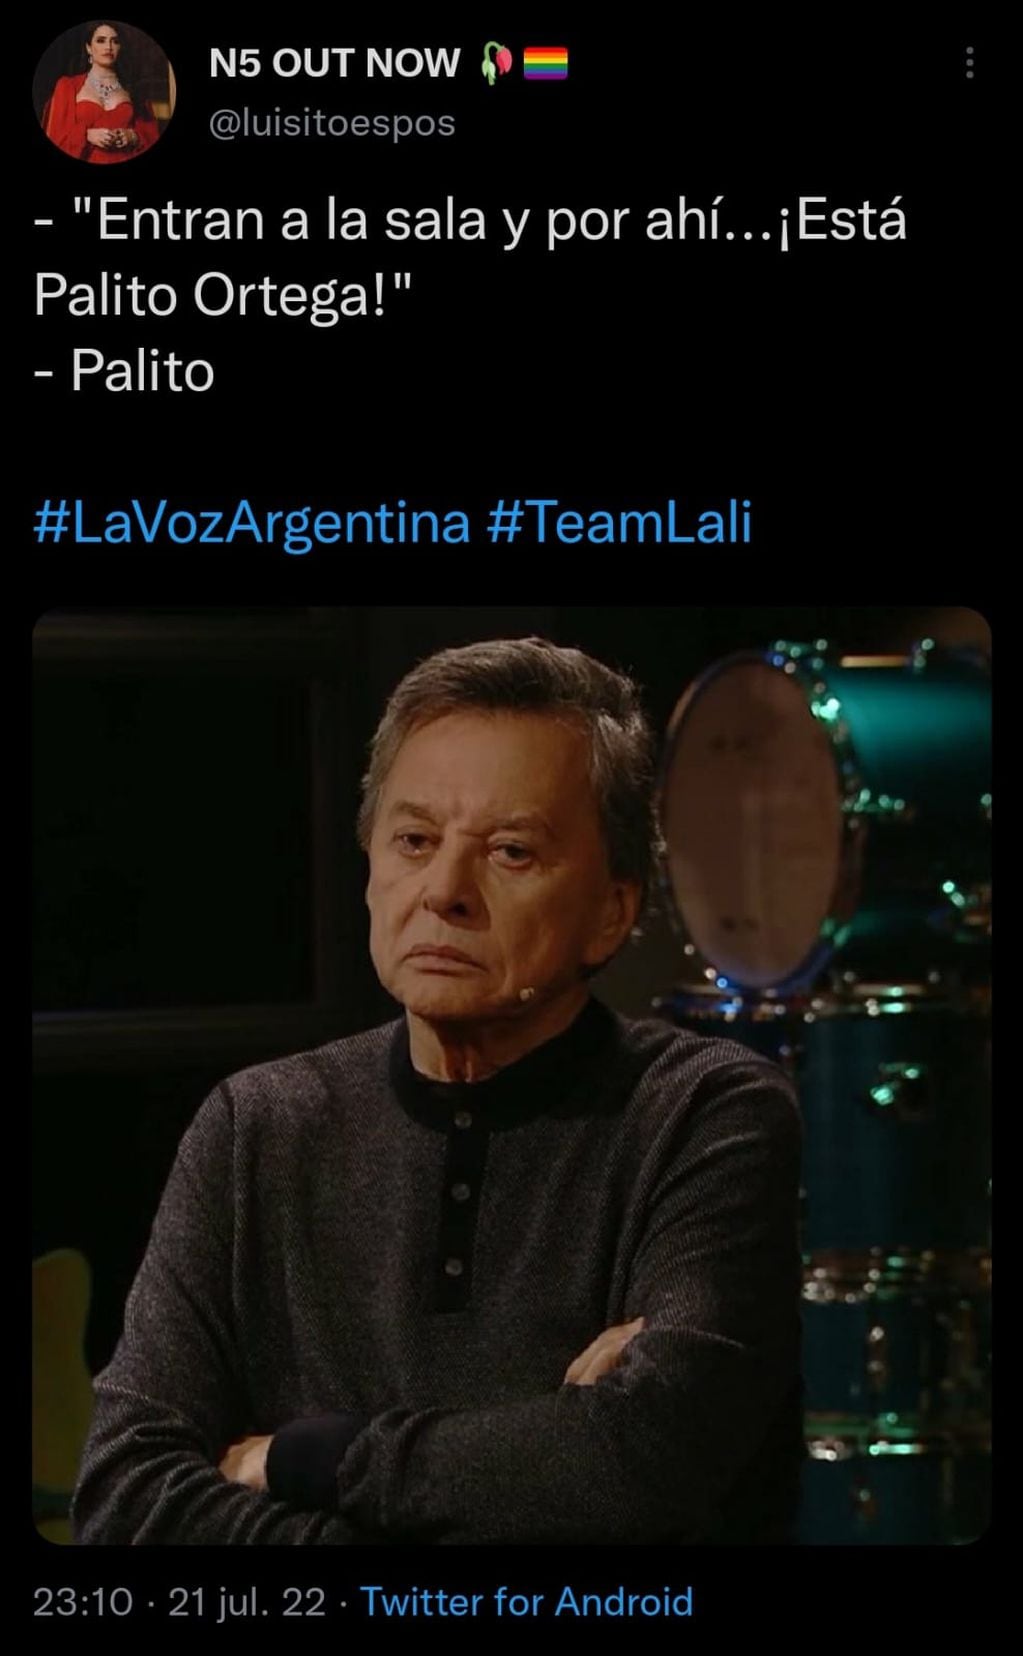 Los memes de Palito Ortega en Twitter (Captura de pantalla)